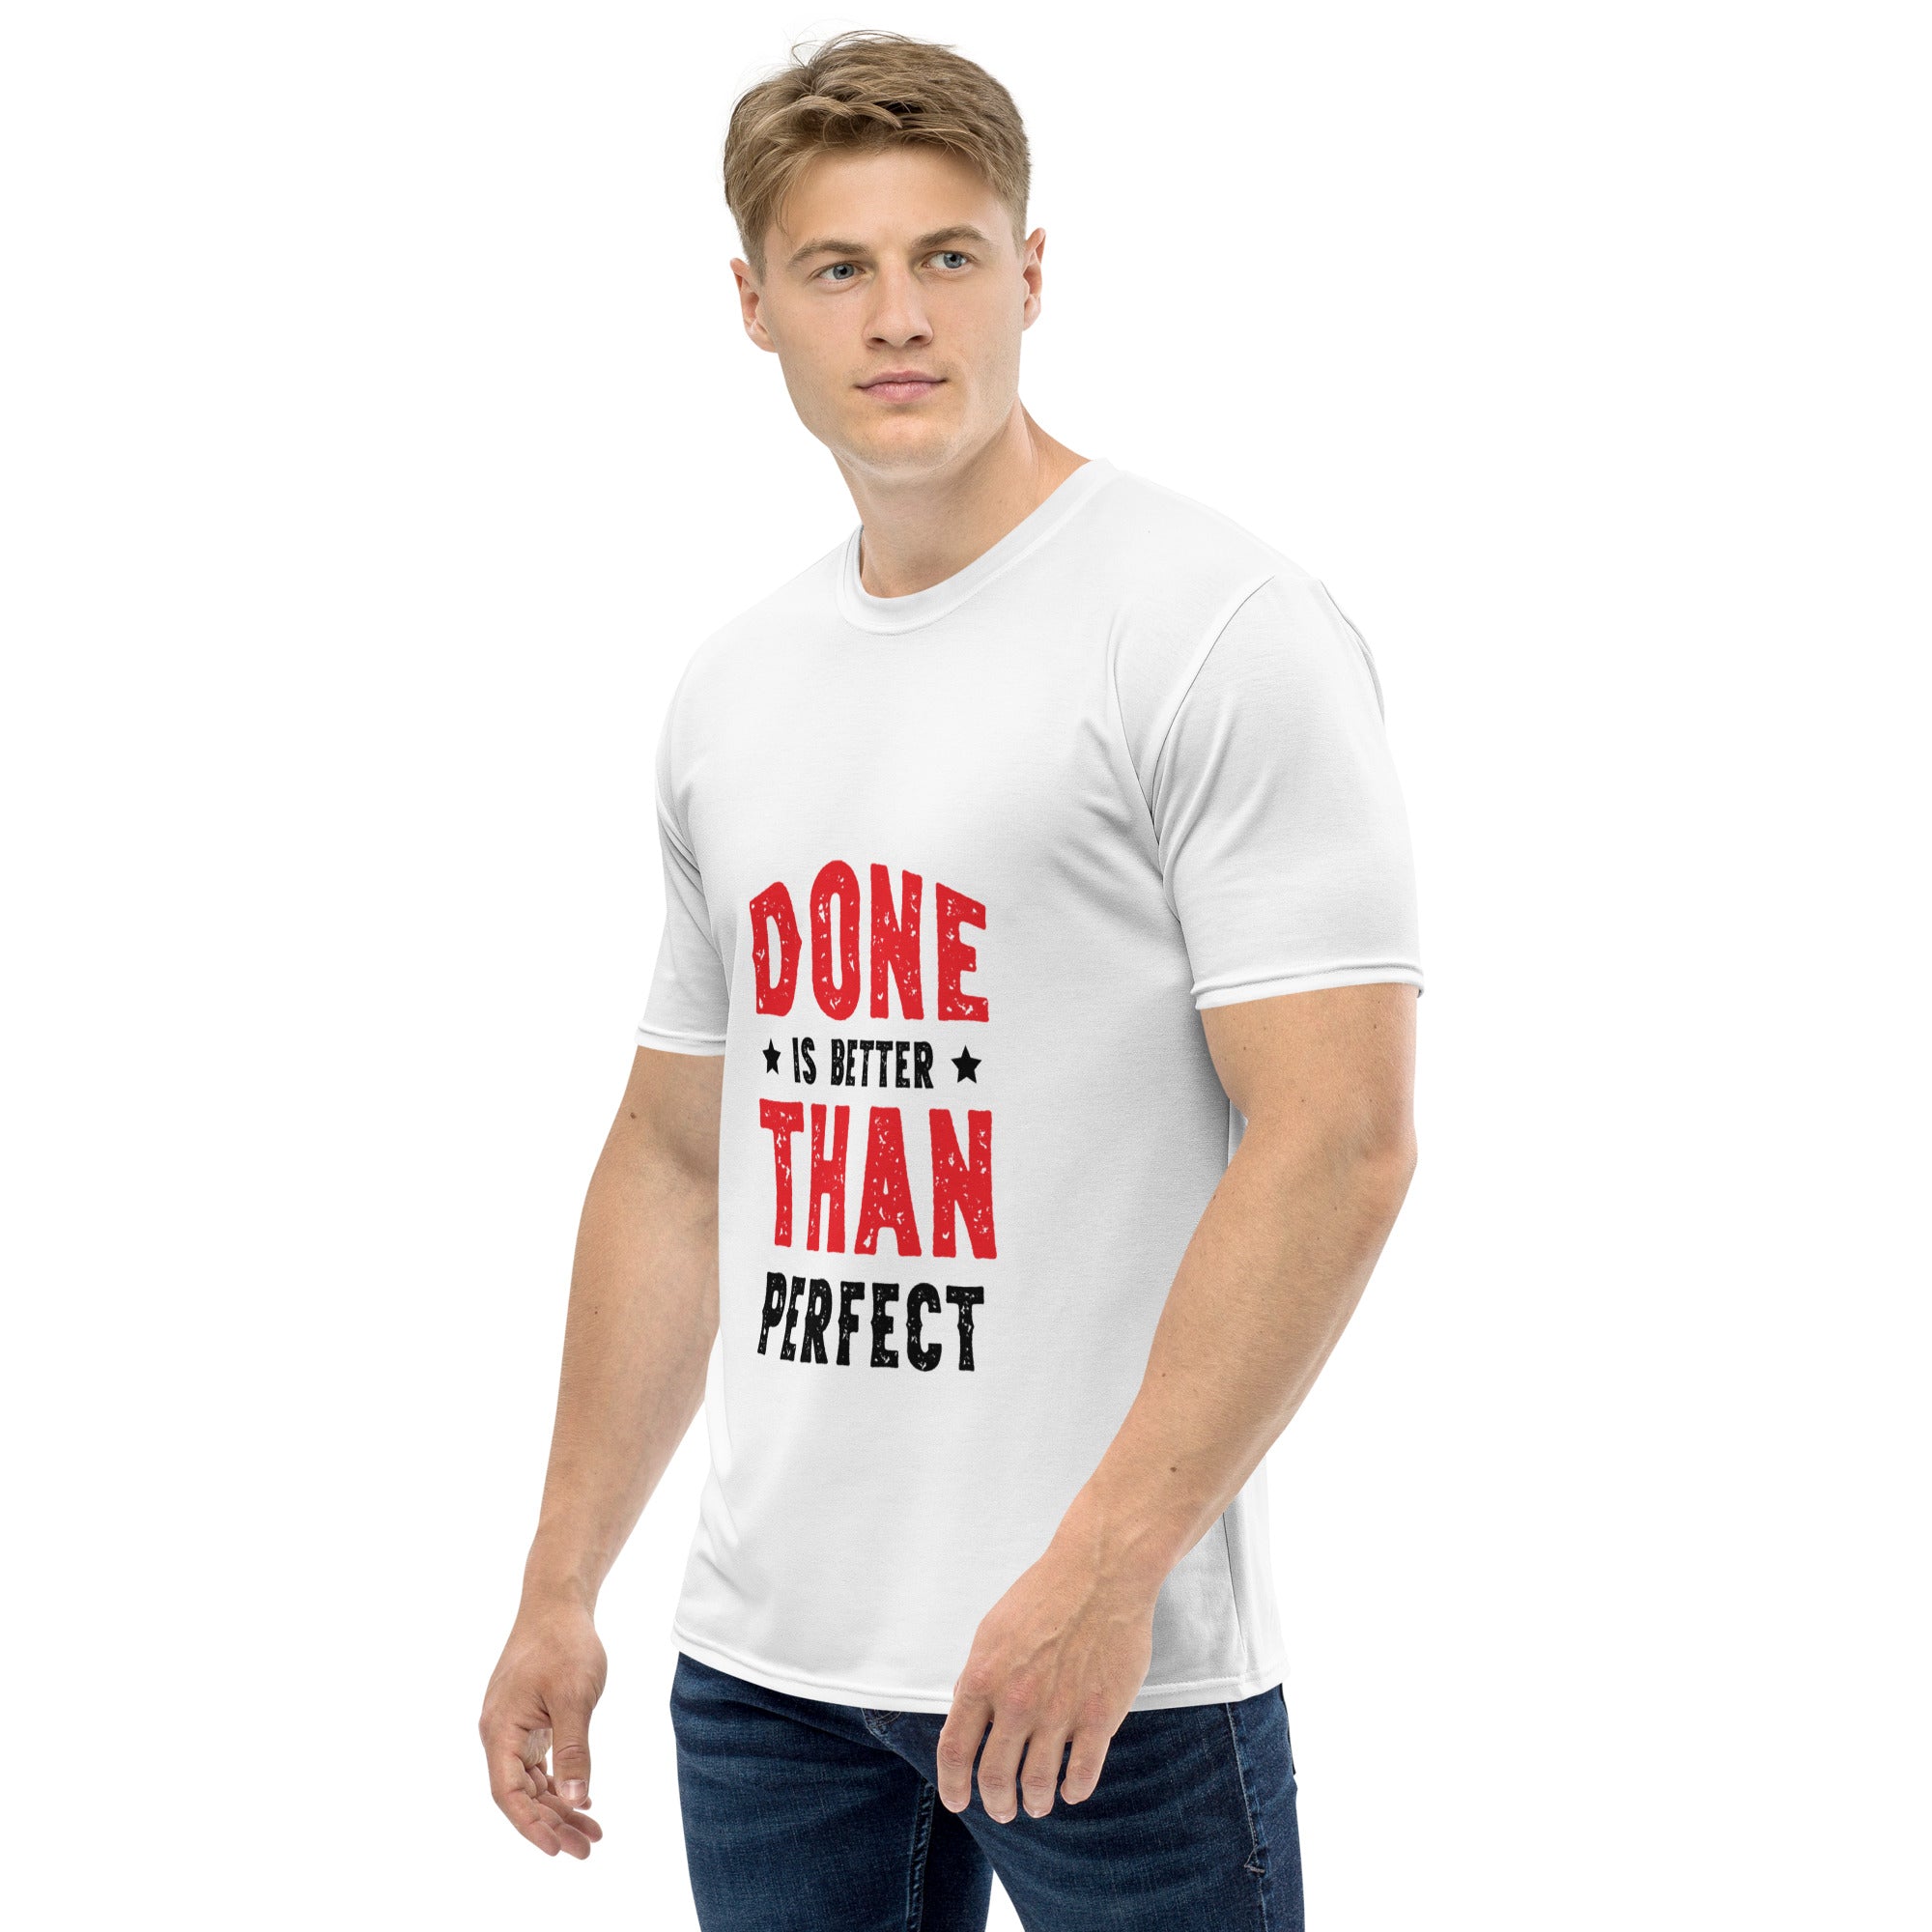 Men's t-shirt